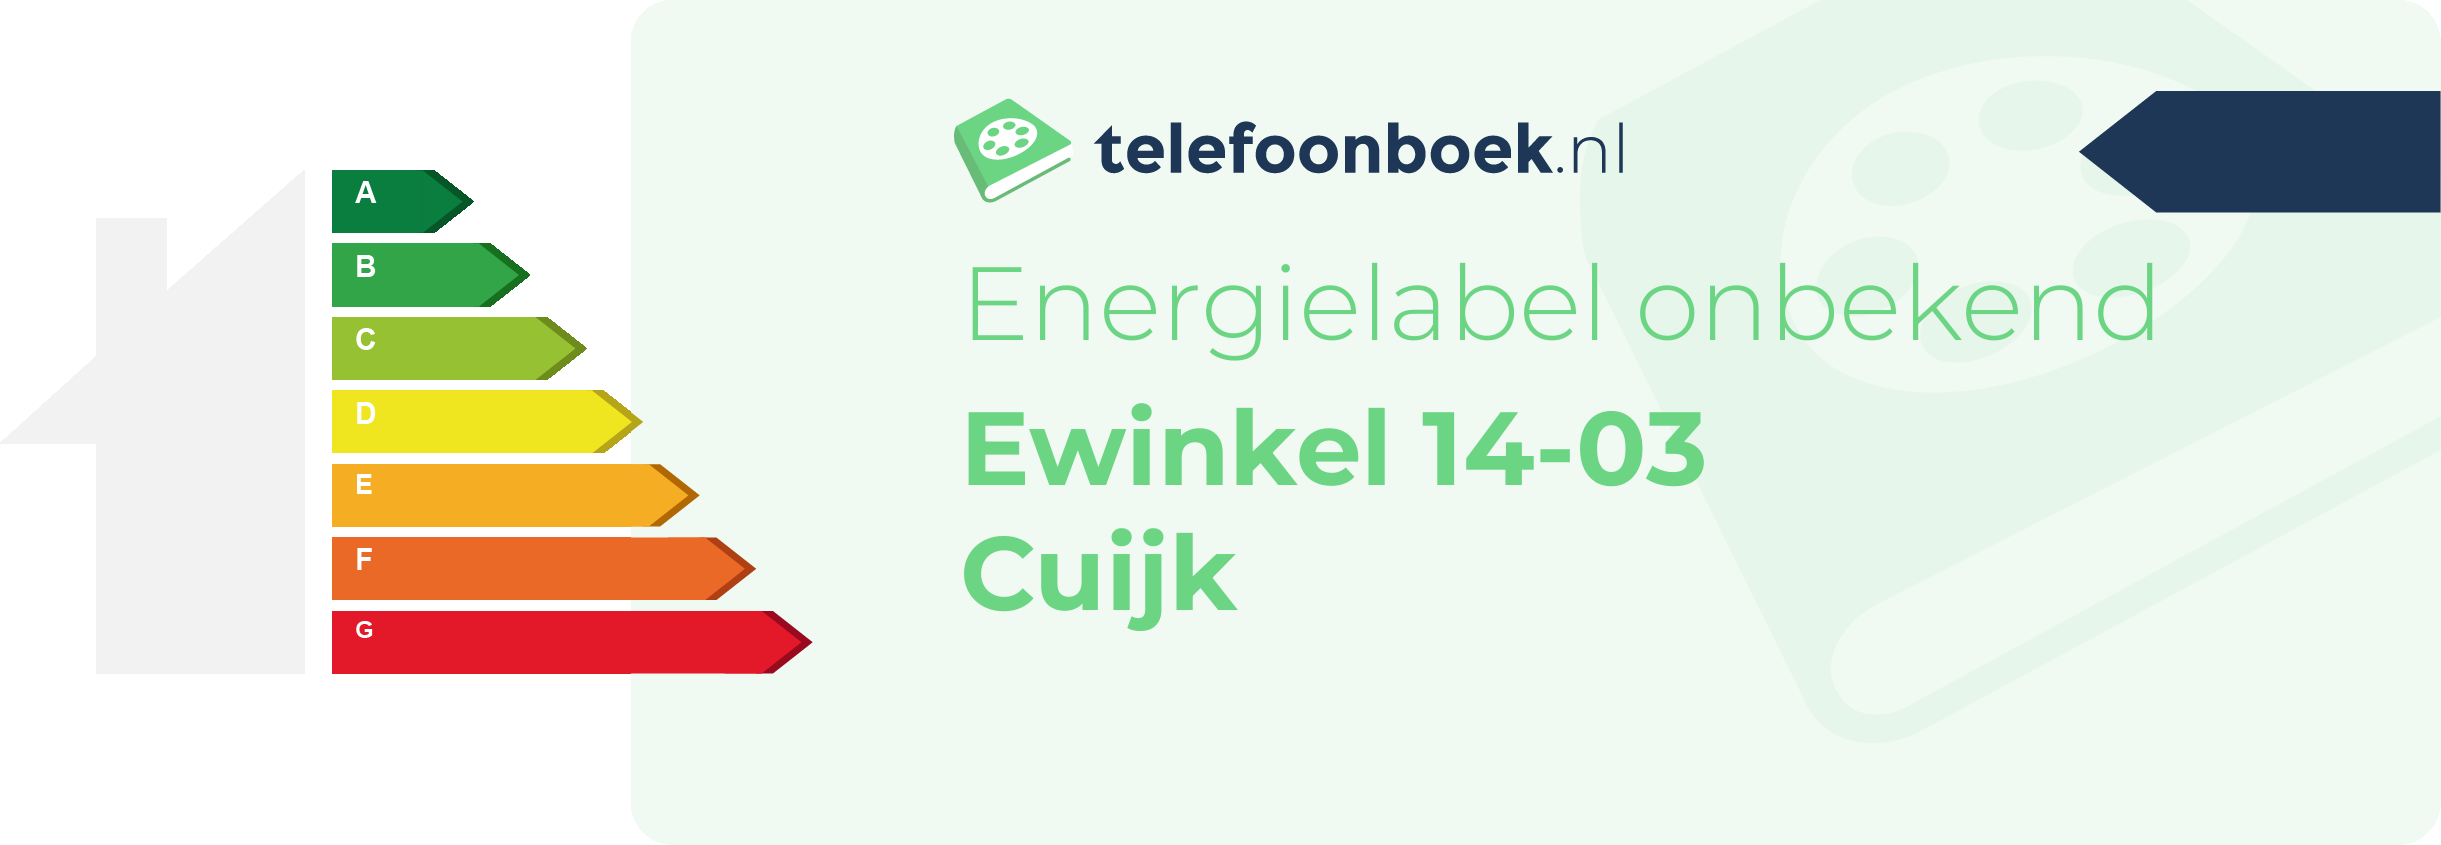 Energielabel Ewinkel 14-03 Cuijk